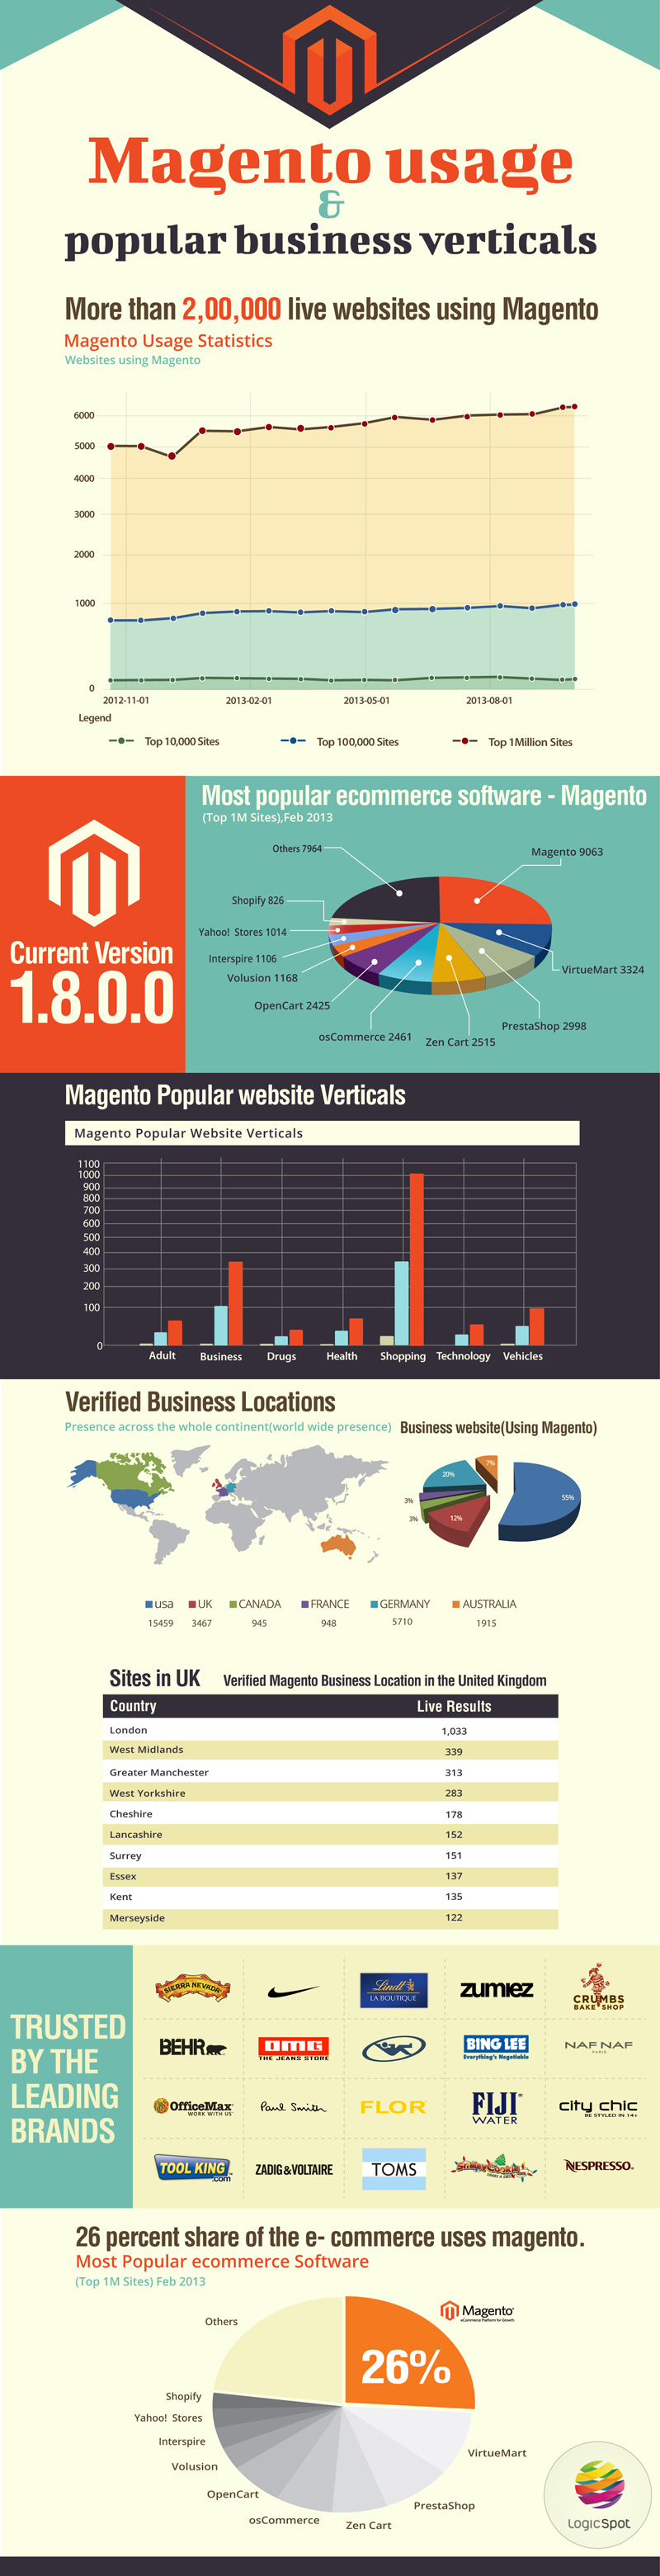 Magento uses Info graphics